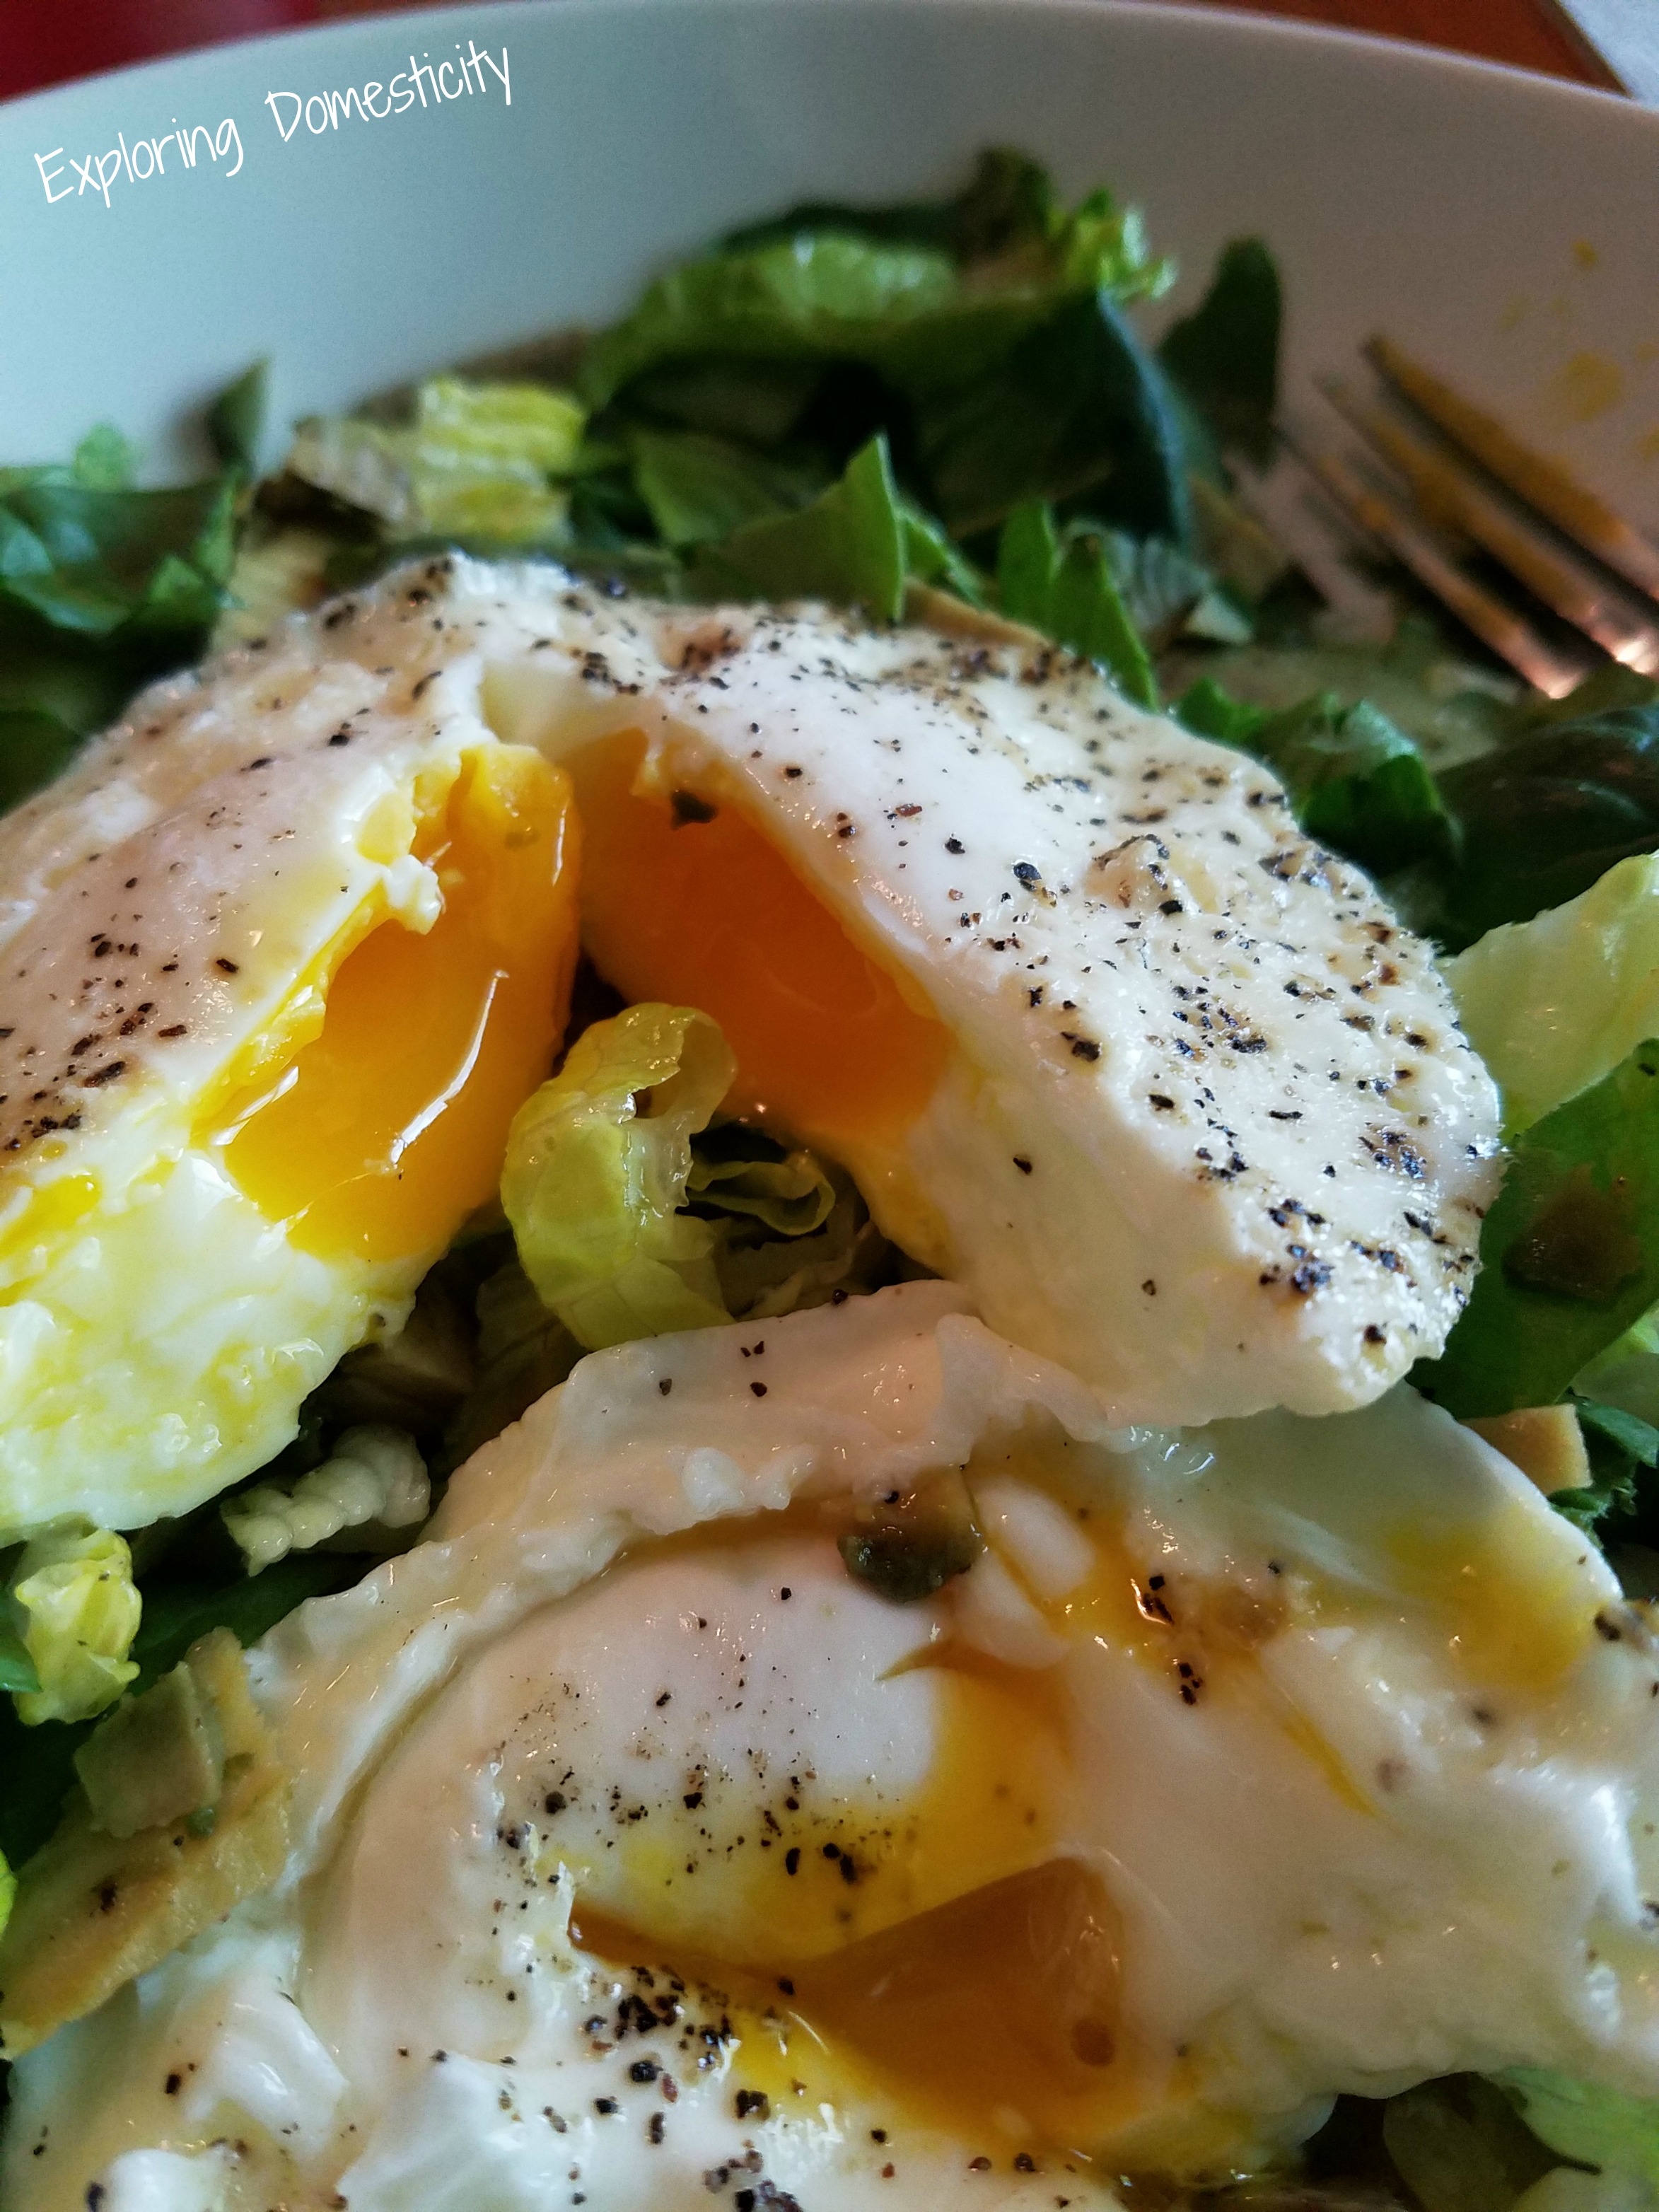 https://exploringdomesticity.com/wp-content/uploads/2016/10/Poached-Egg-Breakfast-Salad.jpg